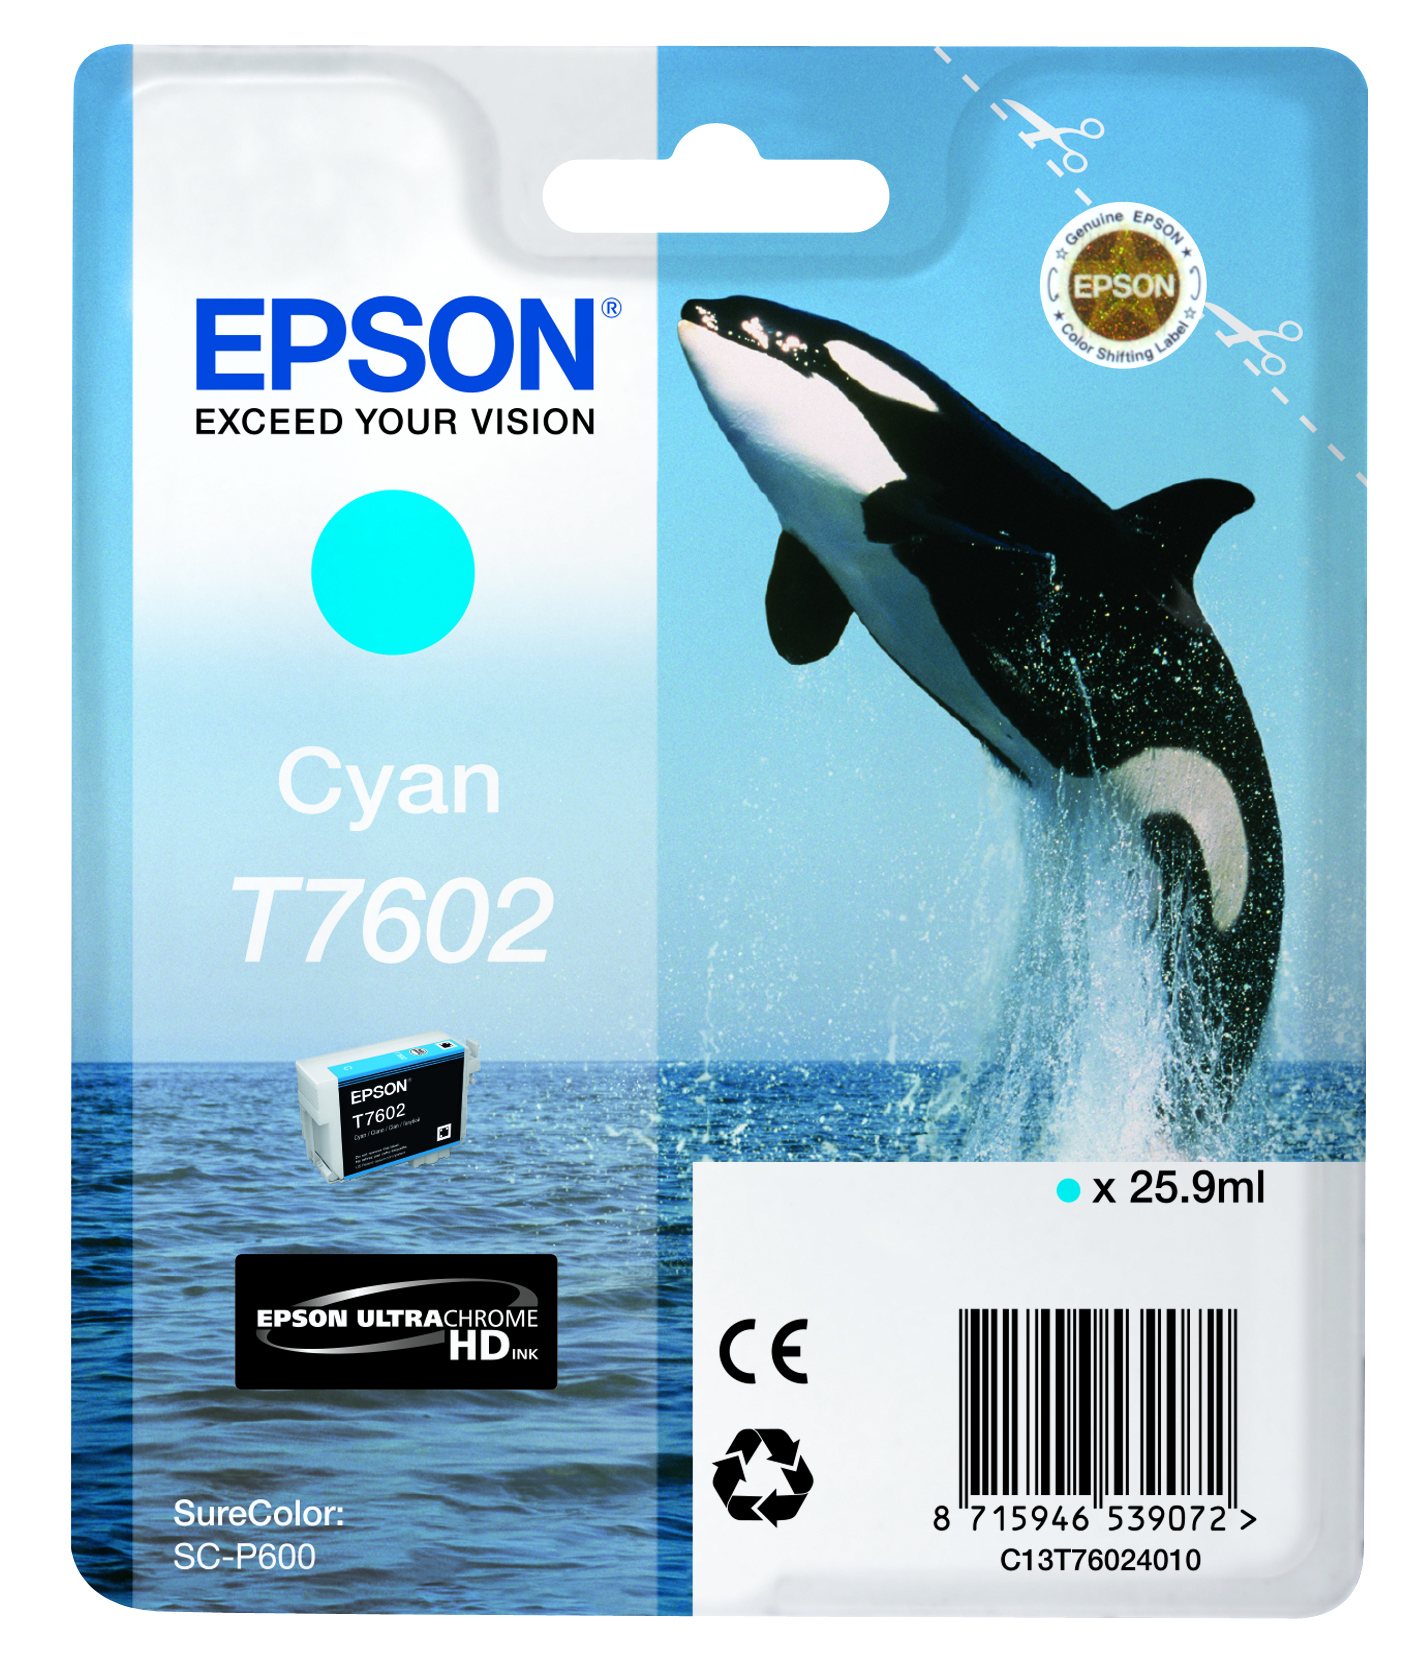 Epson T7602 cyaan single pack / cyaan